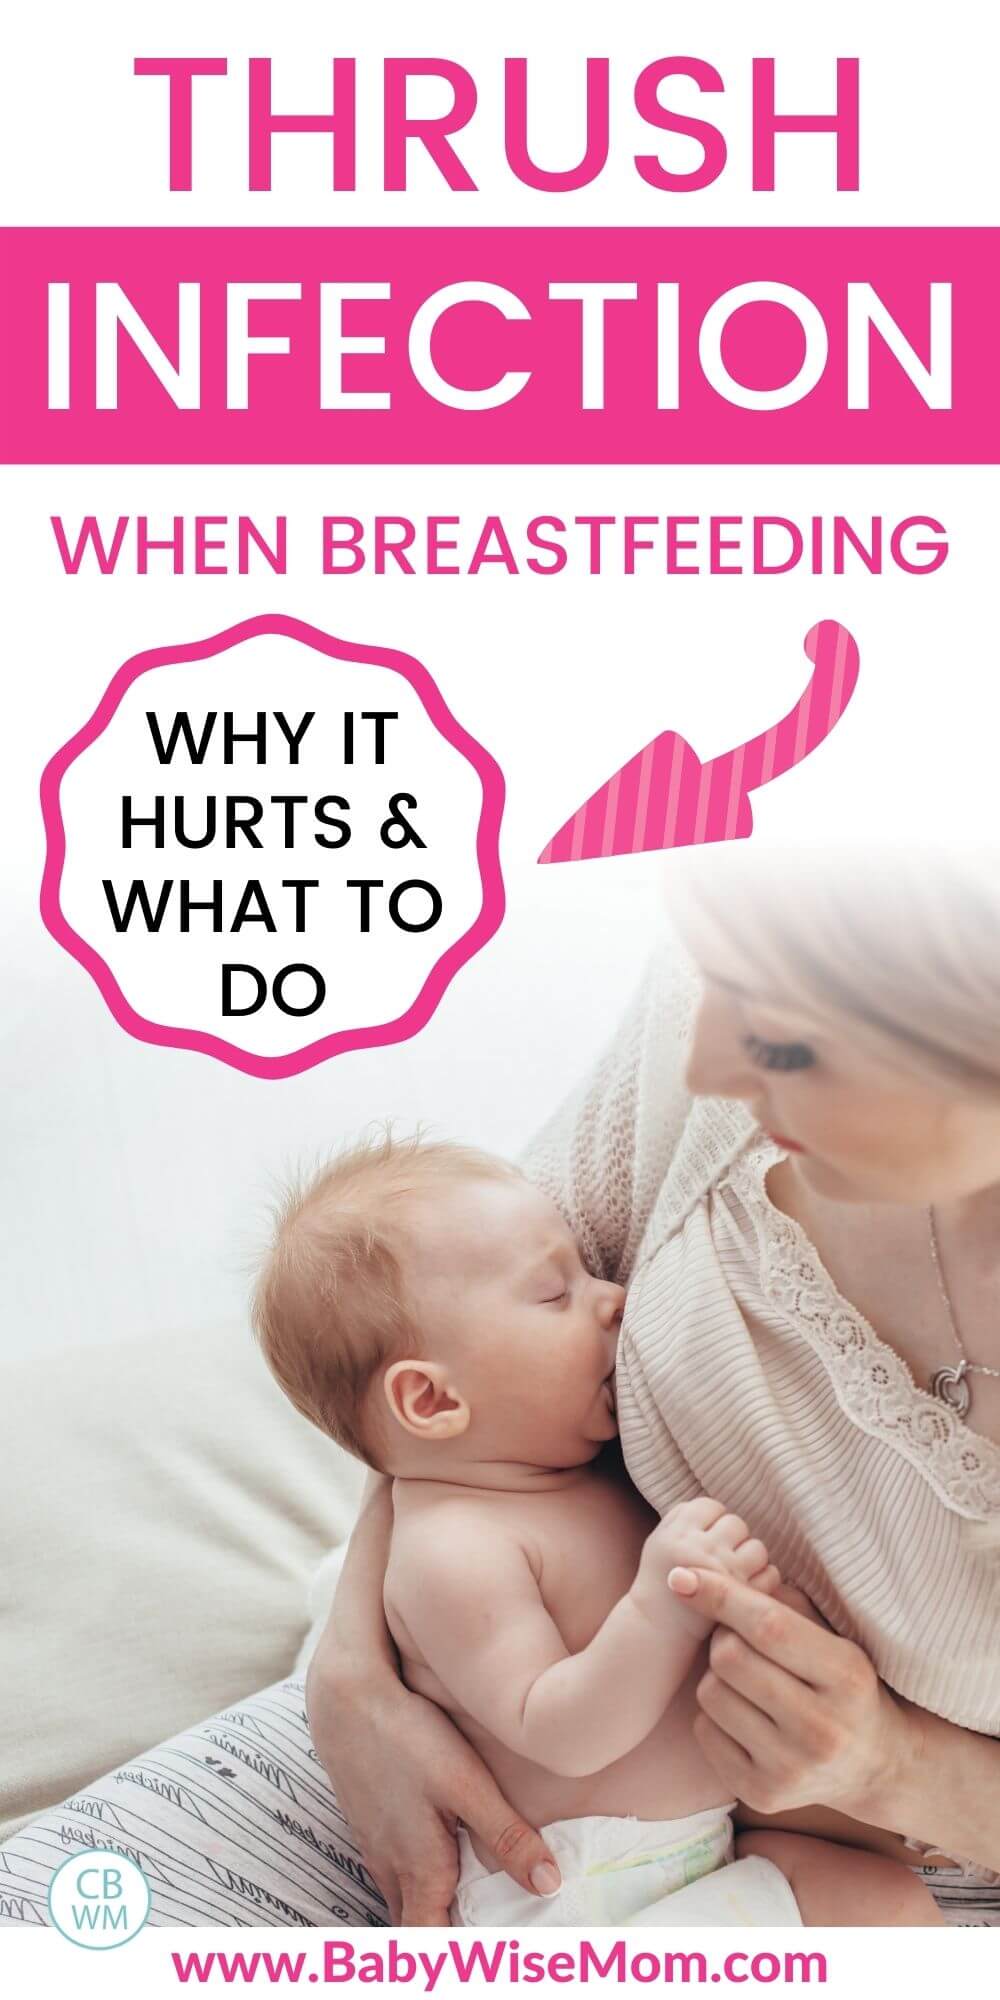 Thrush infection when breastfeeding